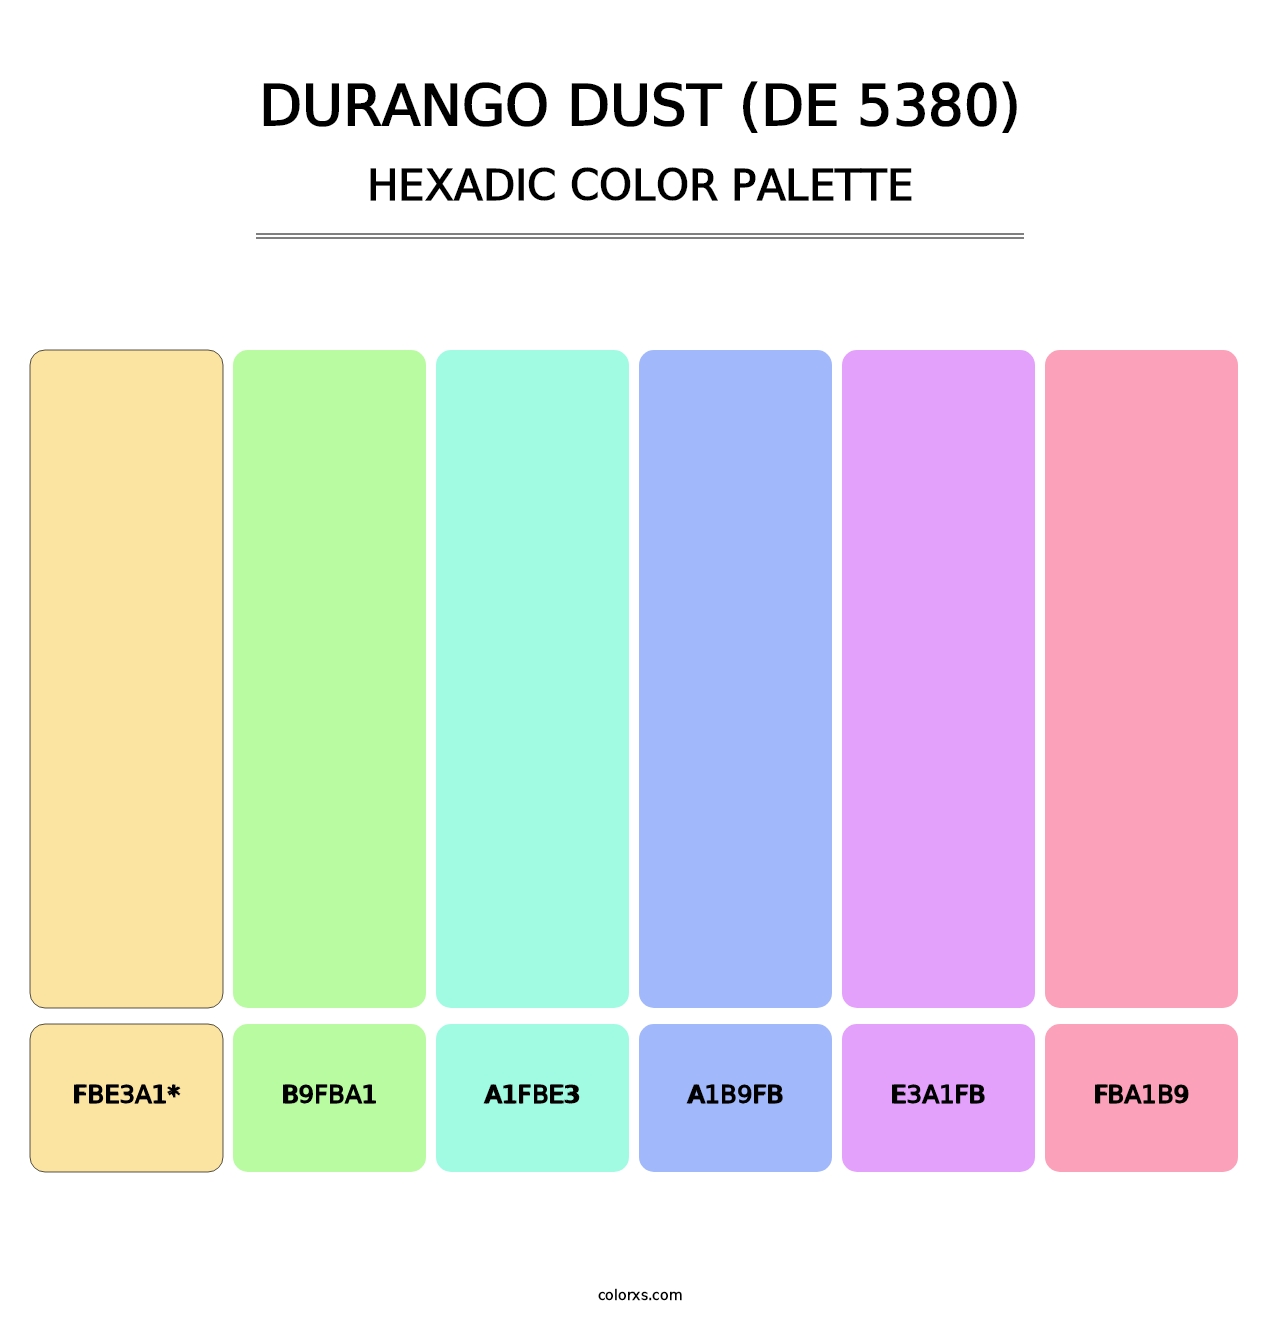 Durango Dust (DE 5380) - Hexadic Color Palette